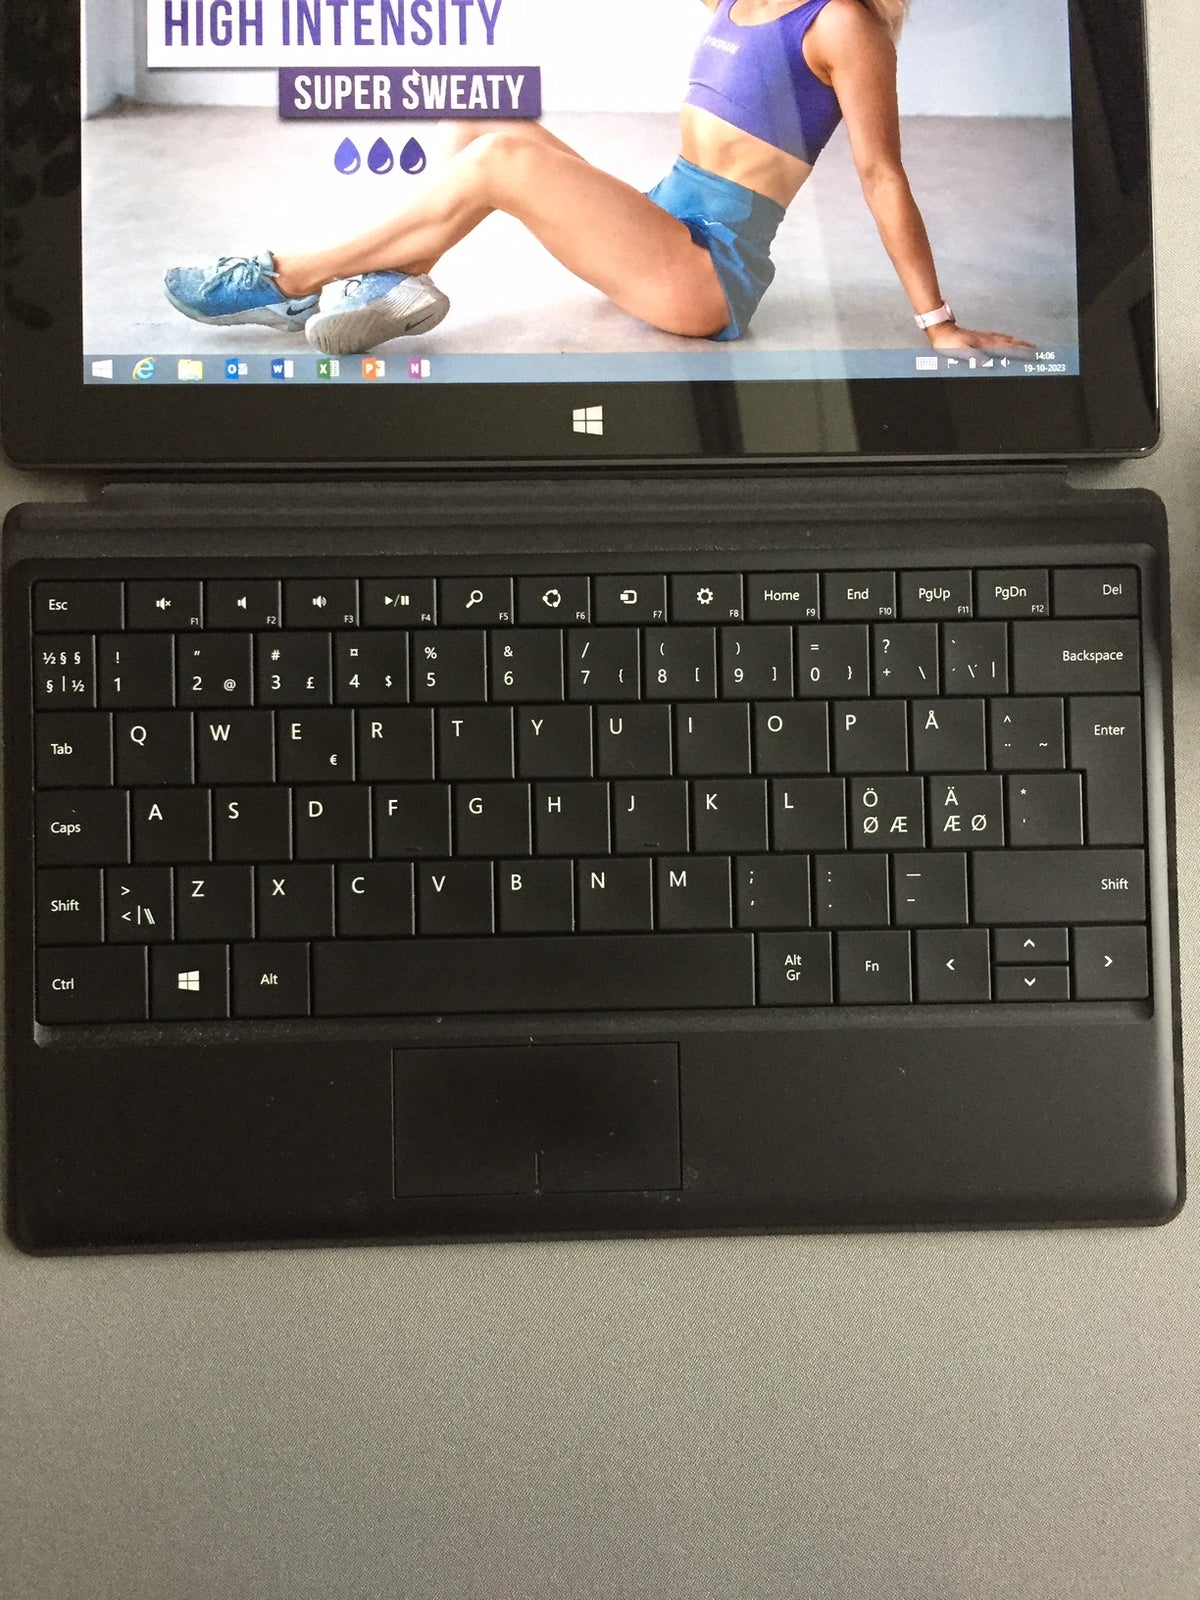 Microsoft RT Surface model 1516, 2 GB ram, 64 GB harddisk